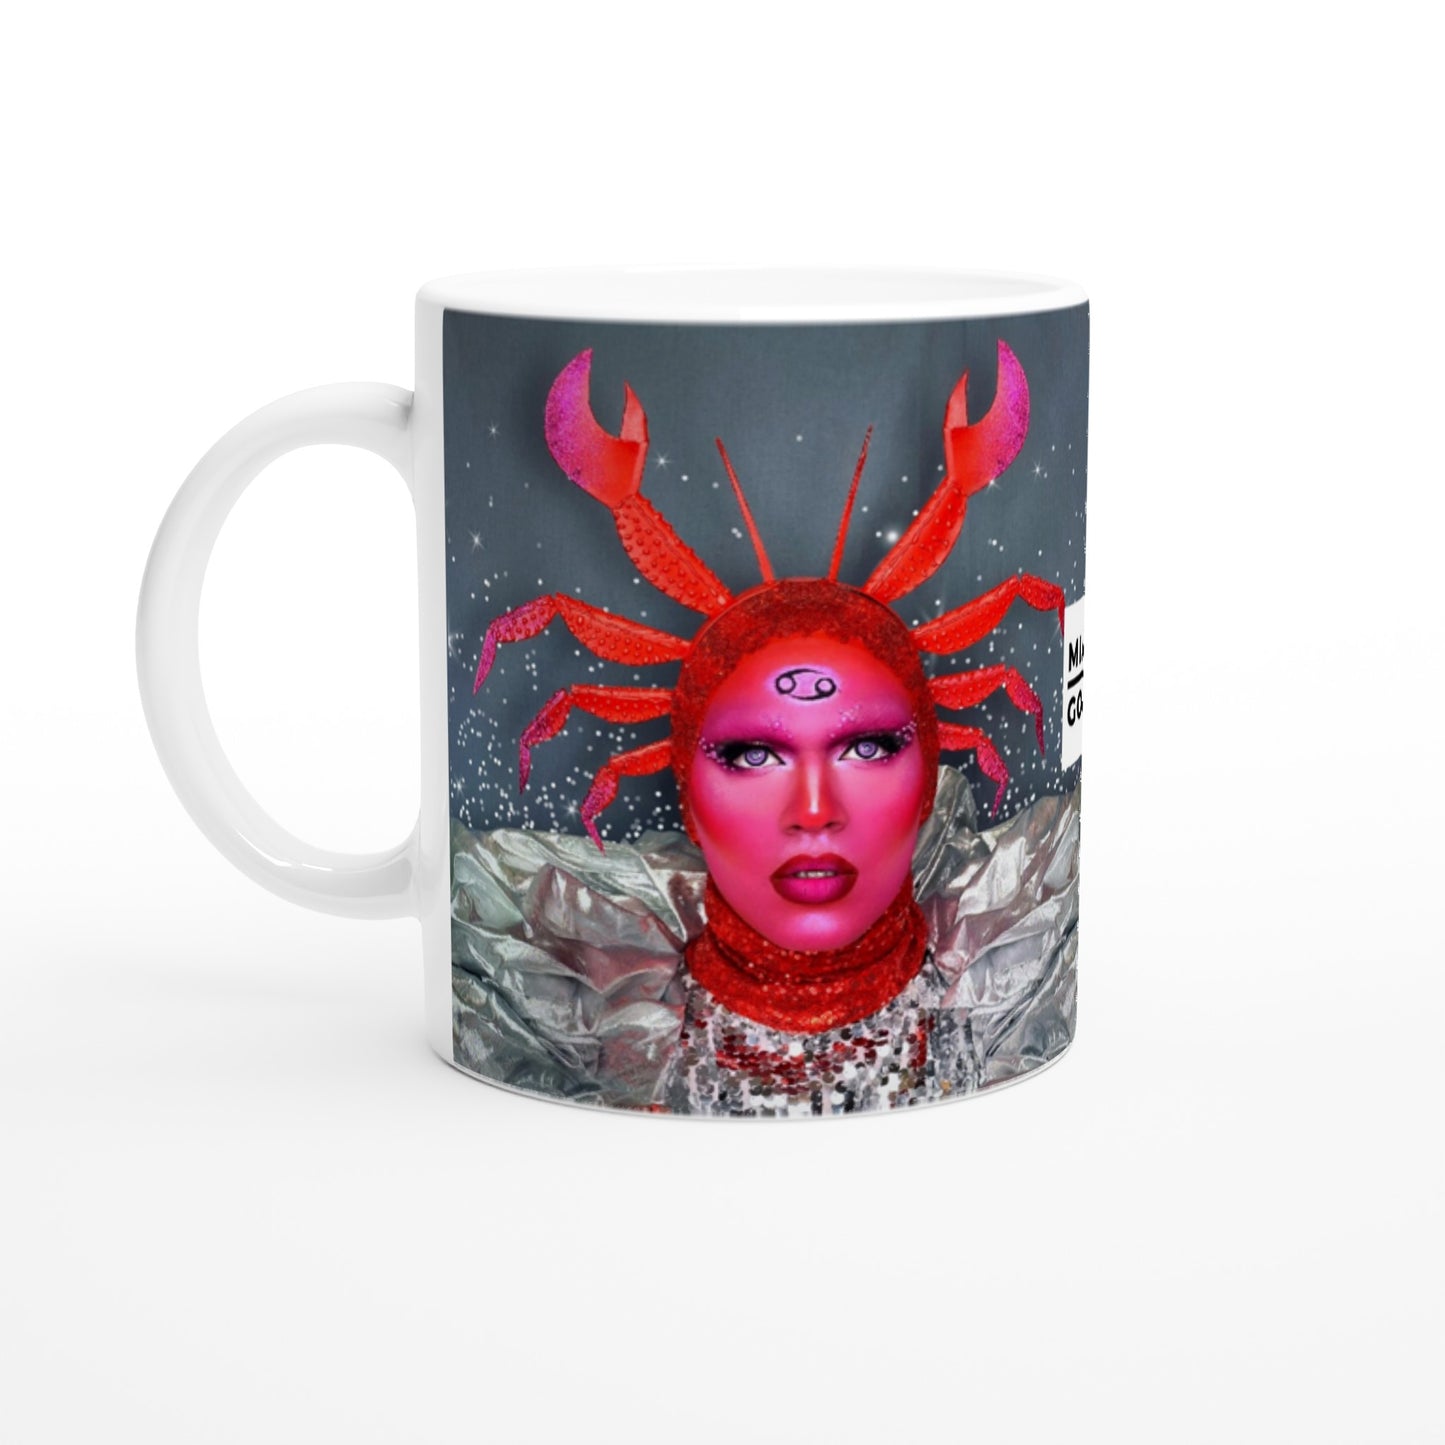 Cancer - Ceramic Mug